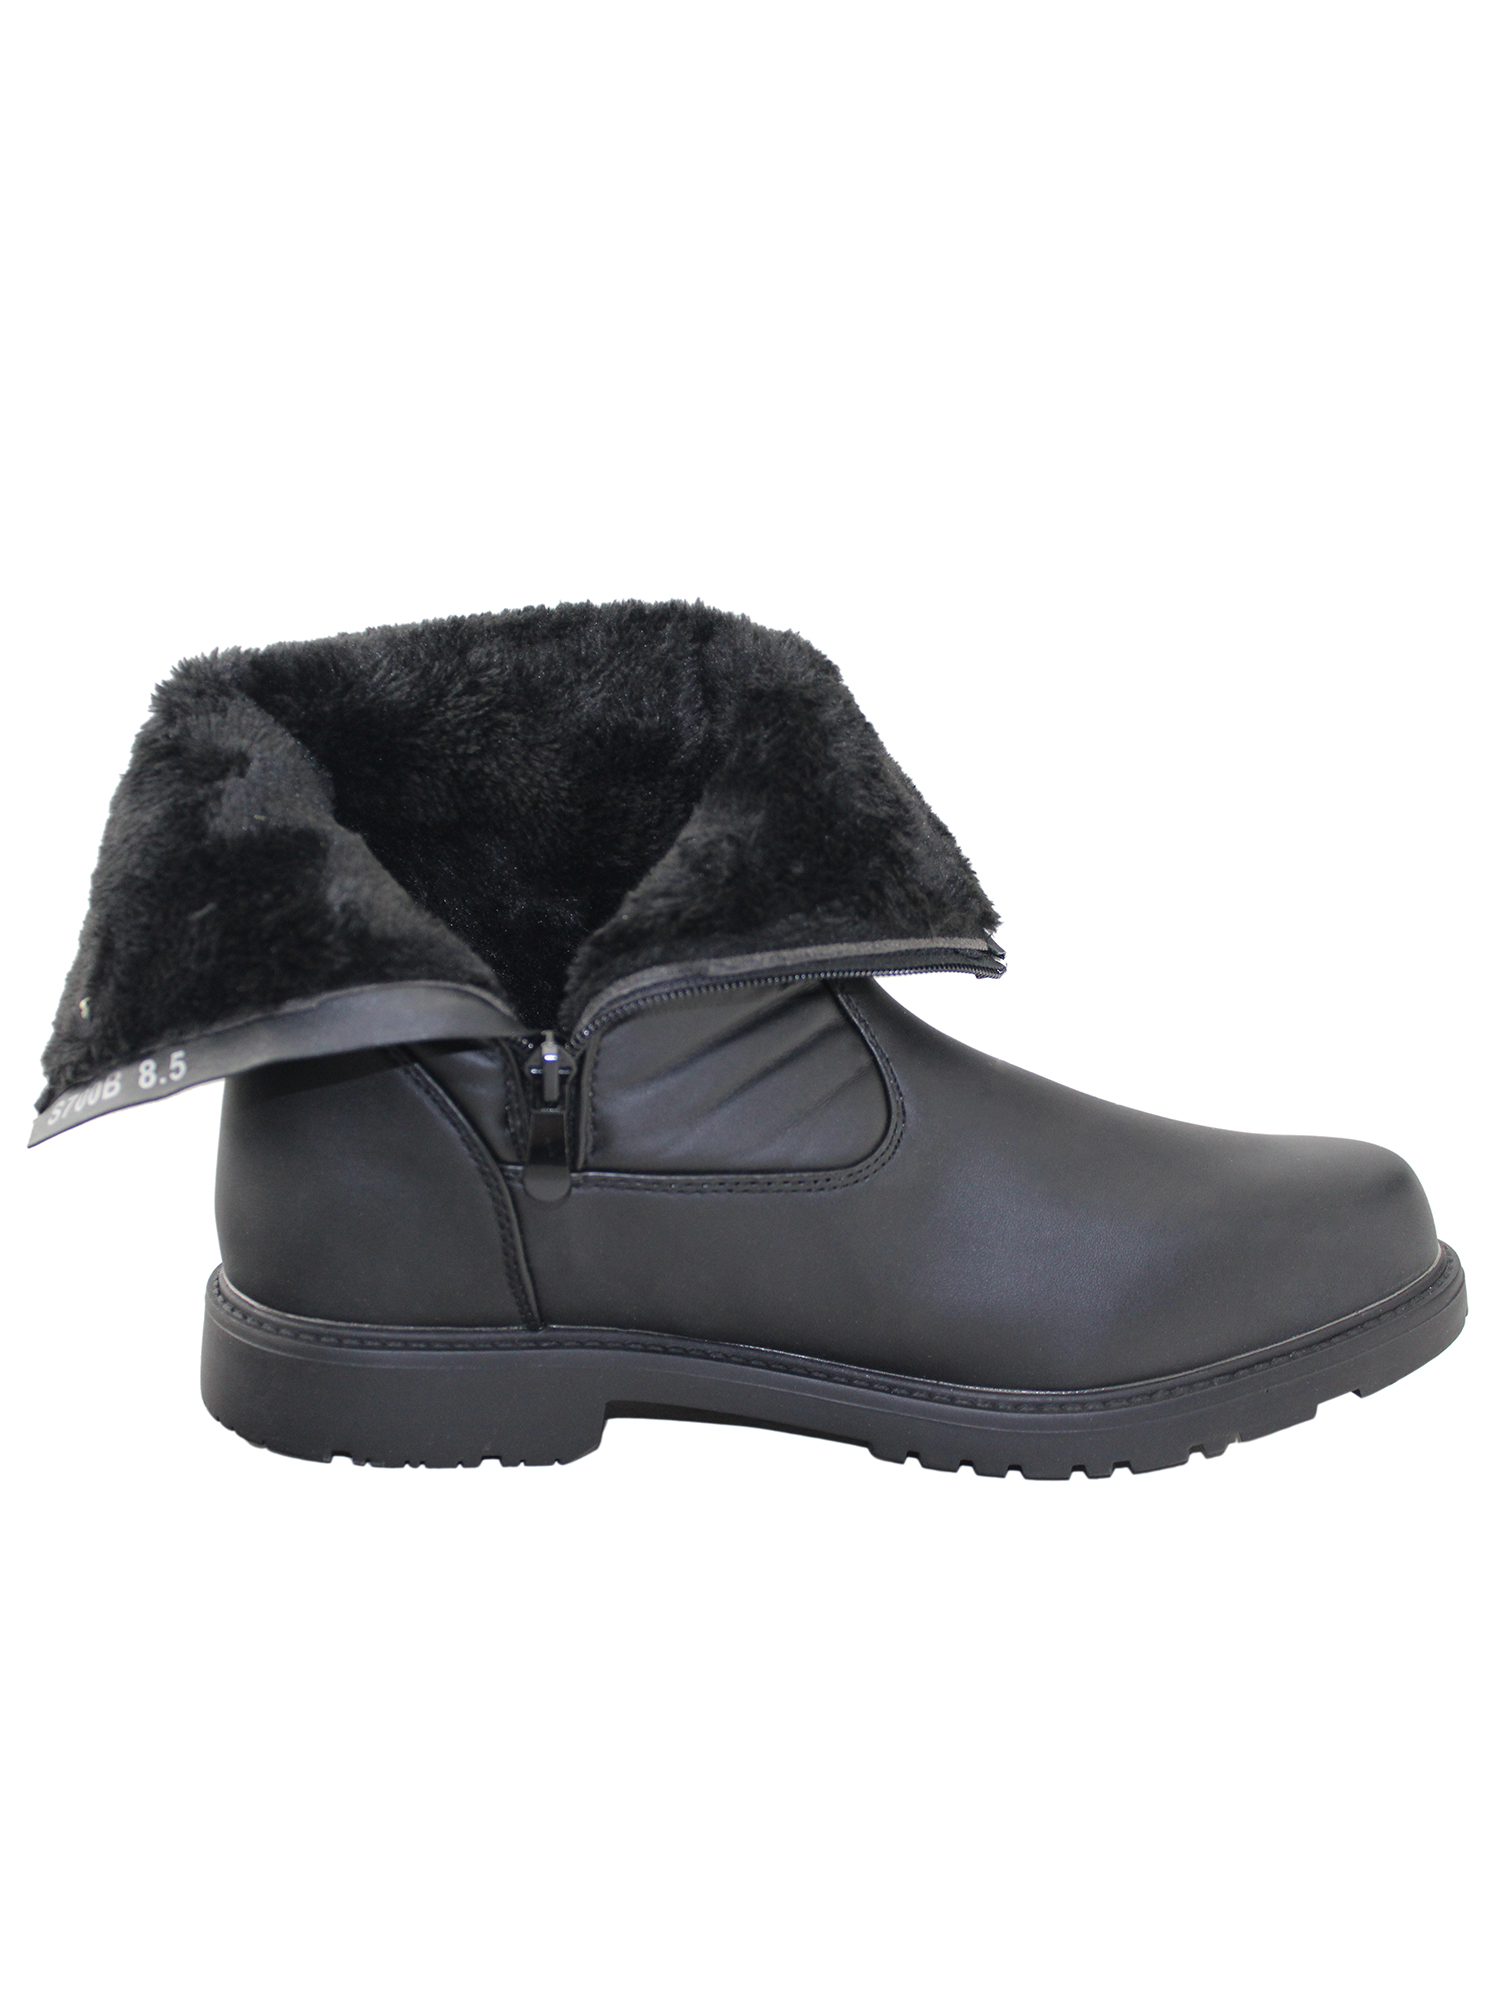 Tanleewa Men's Winter Boots Fur Lining Waterproof Non Slip Snow Boots Side Zipper Shoe Size 8 - image 2 of 6